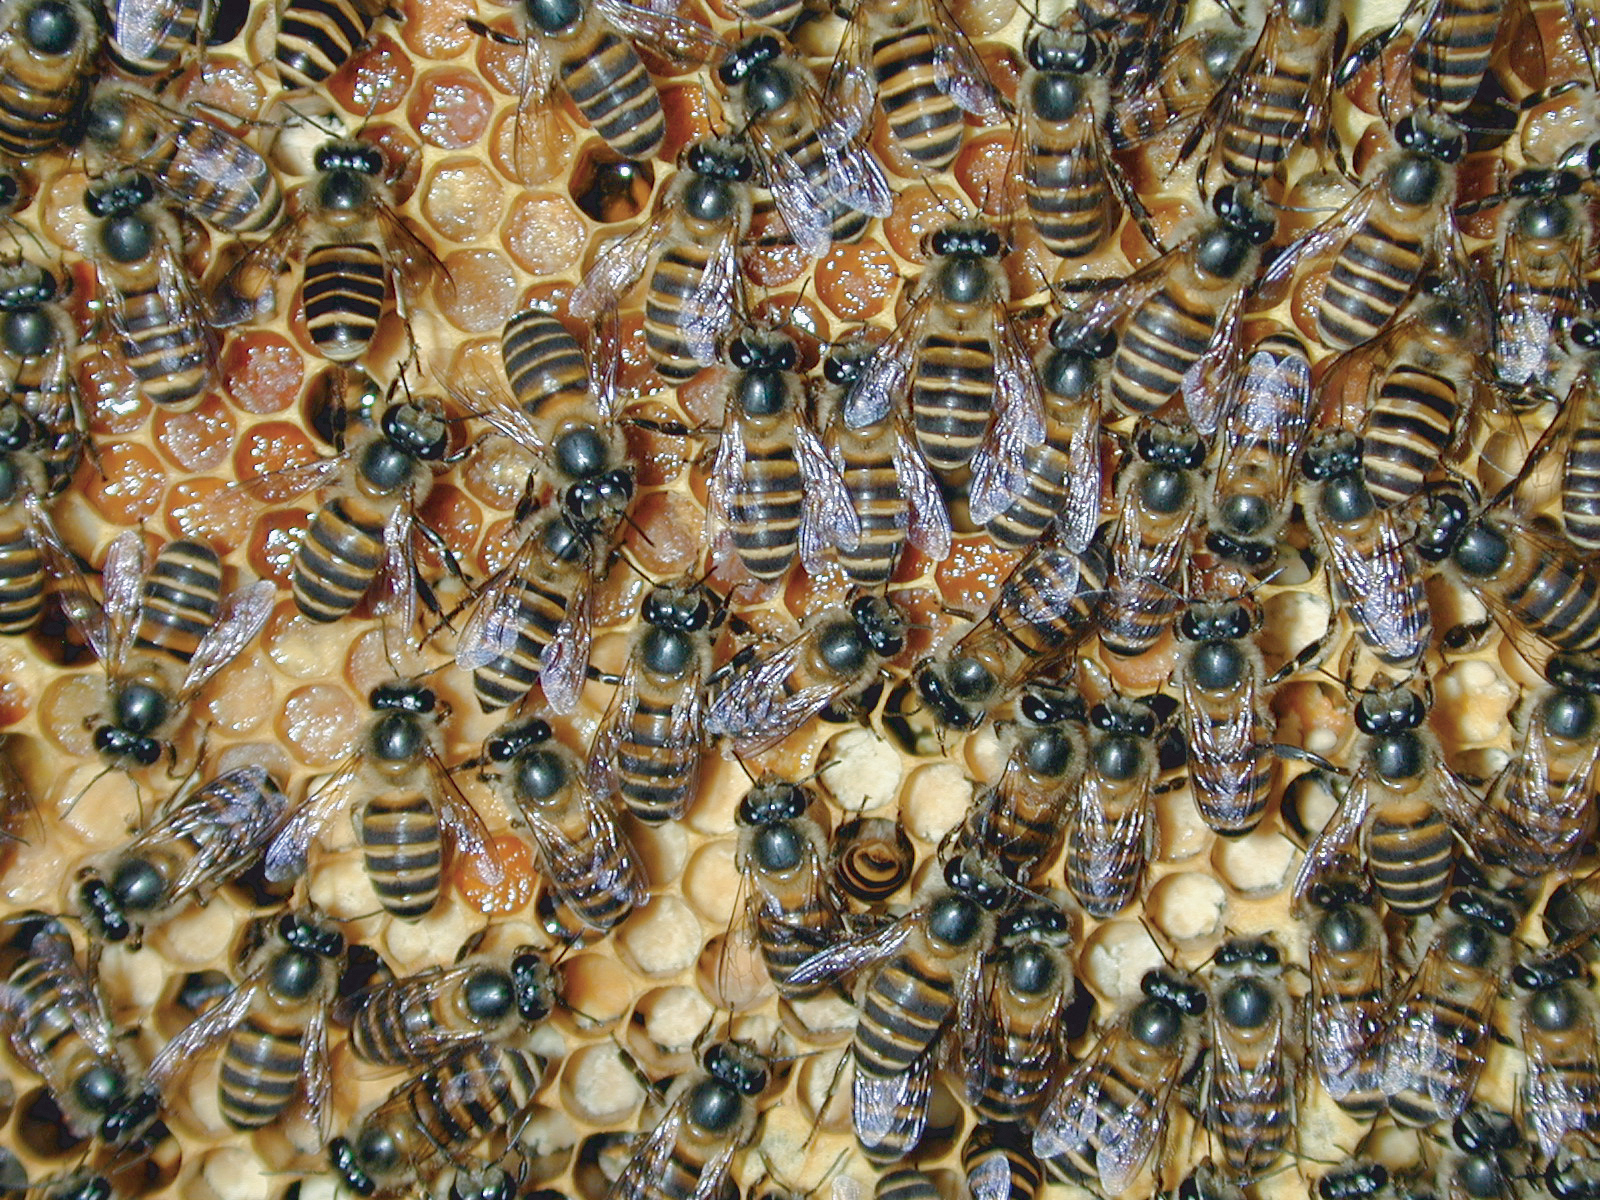 Asian honey bees